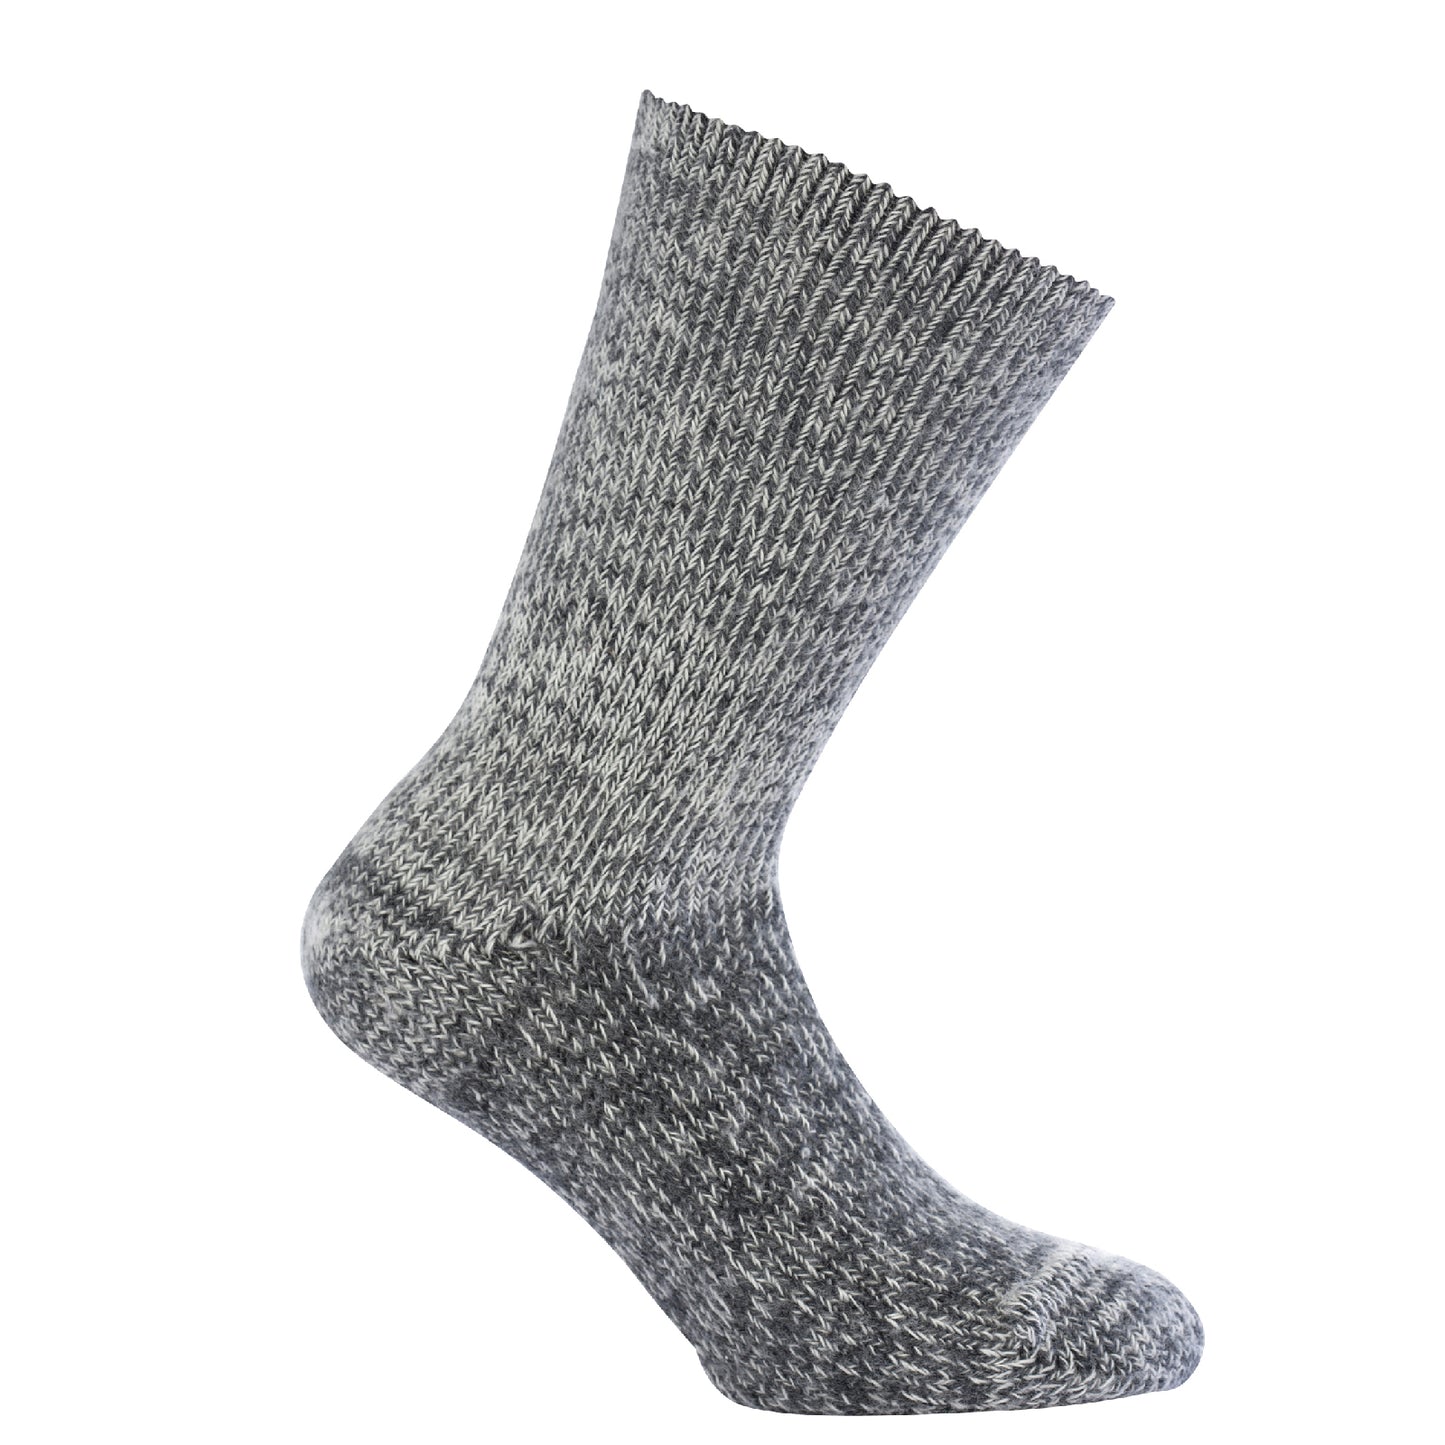 Woolpower - Socks 800 | wool thermo socks